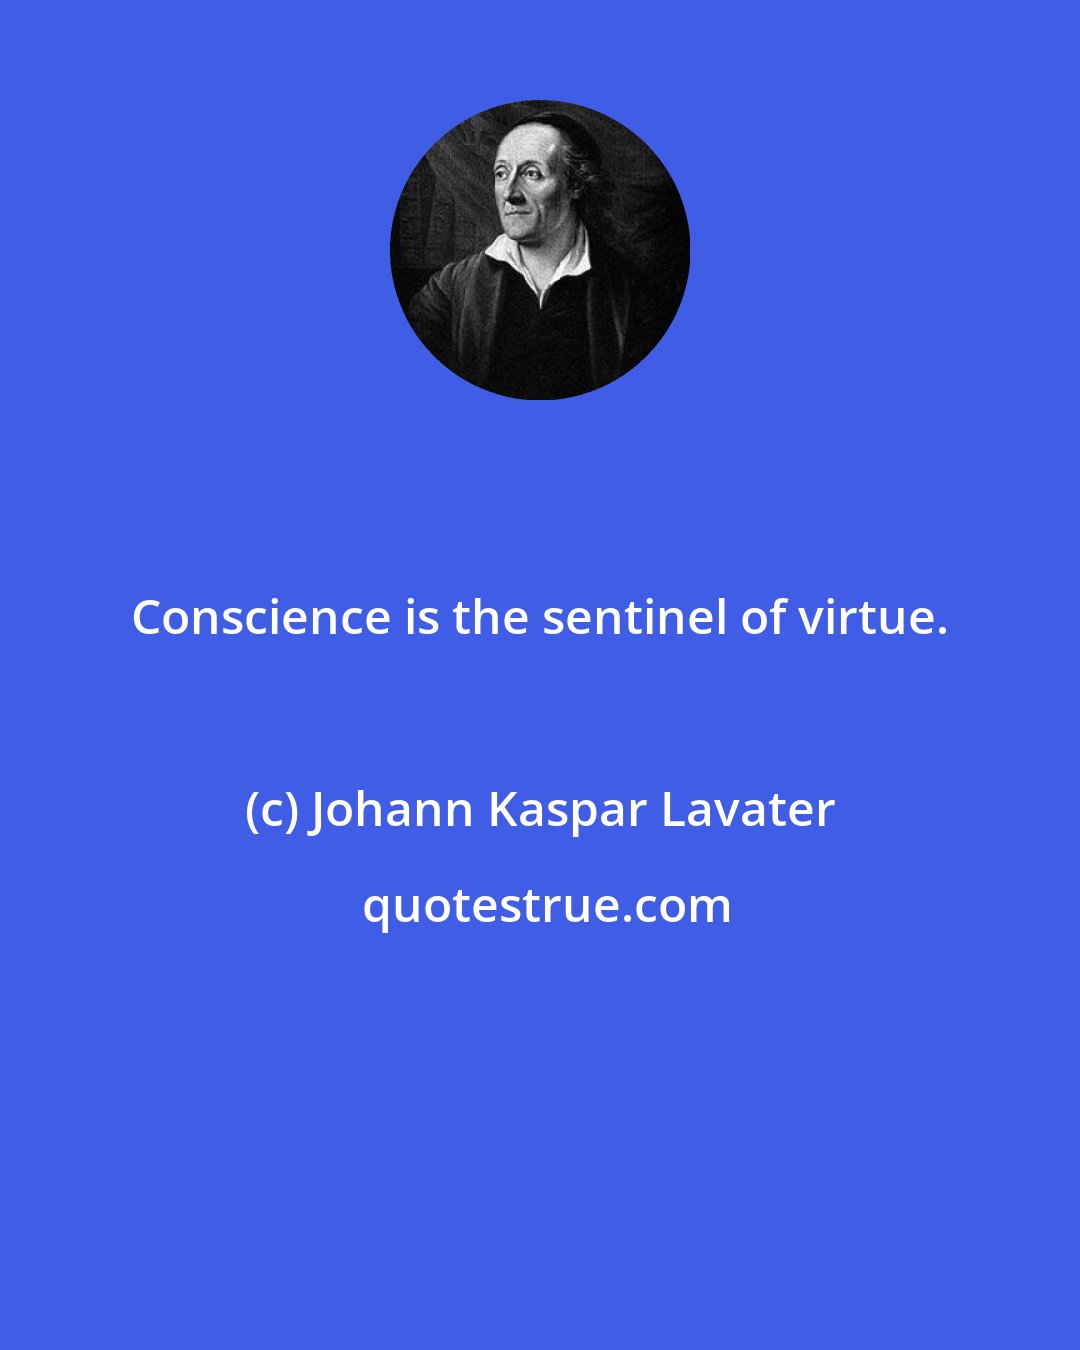 Johann Kaspar Lavater: Conscience is the sentinel of virtue.